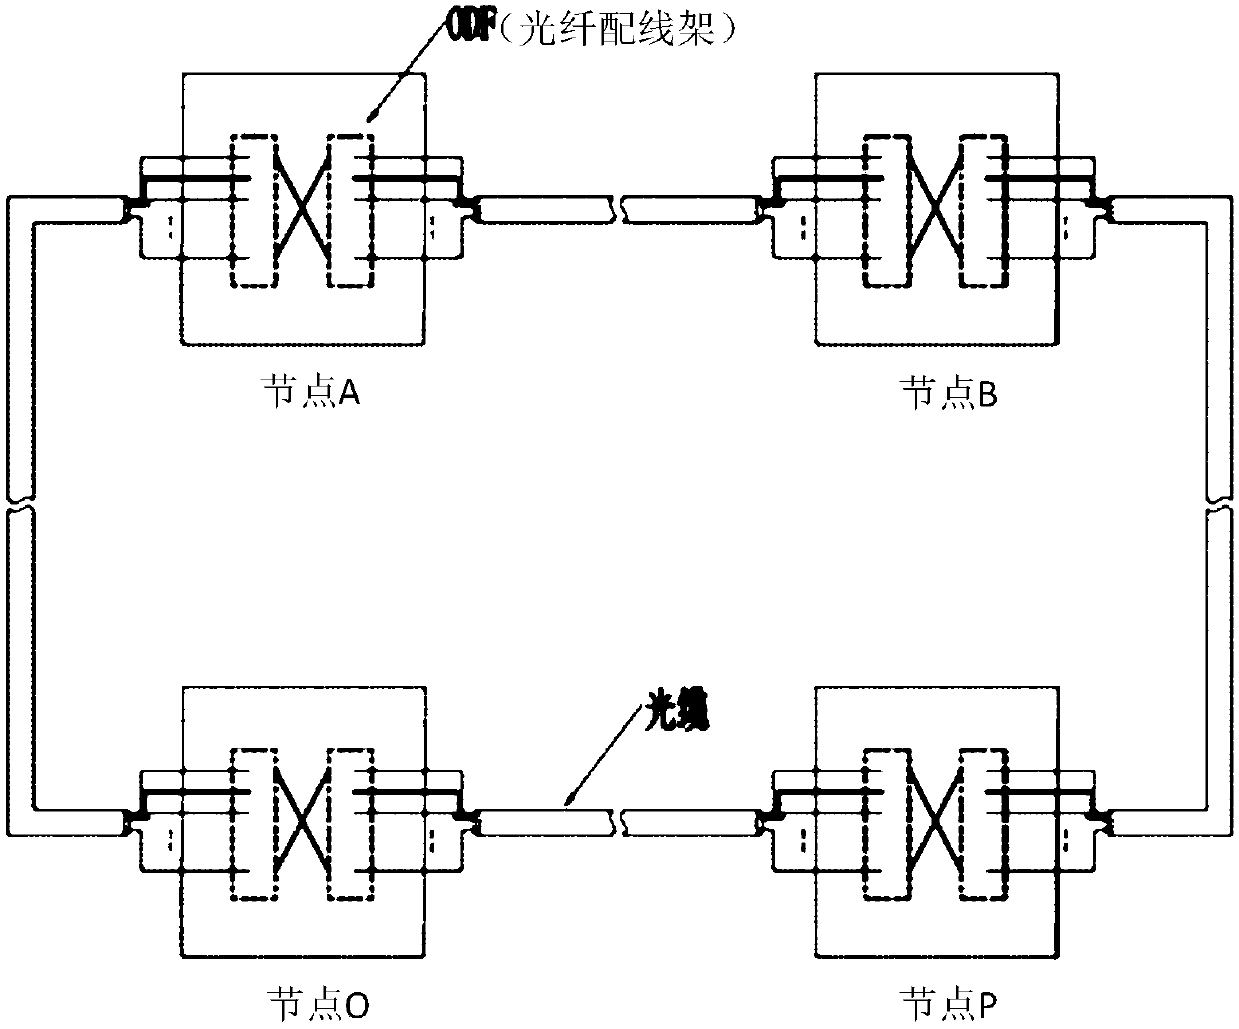 Optical cross connection equipment for metro backbone transport network